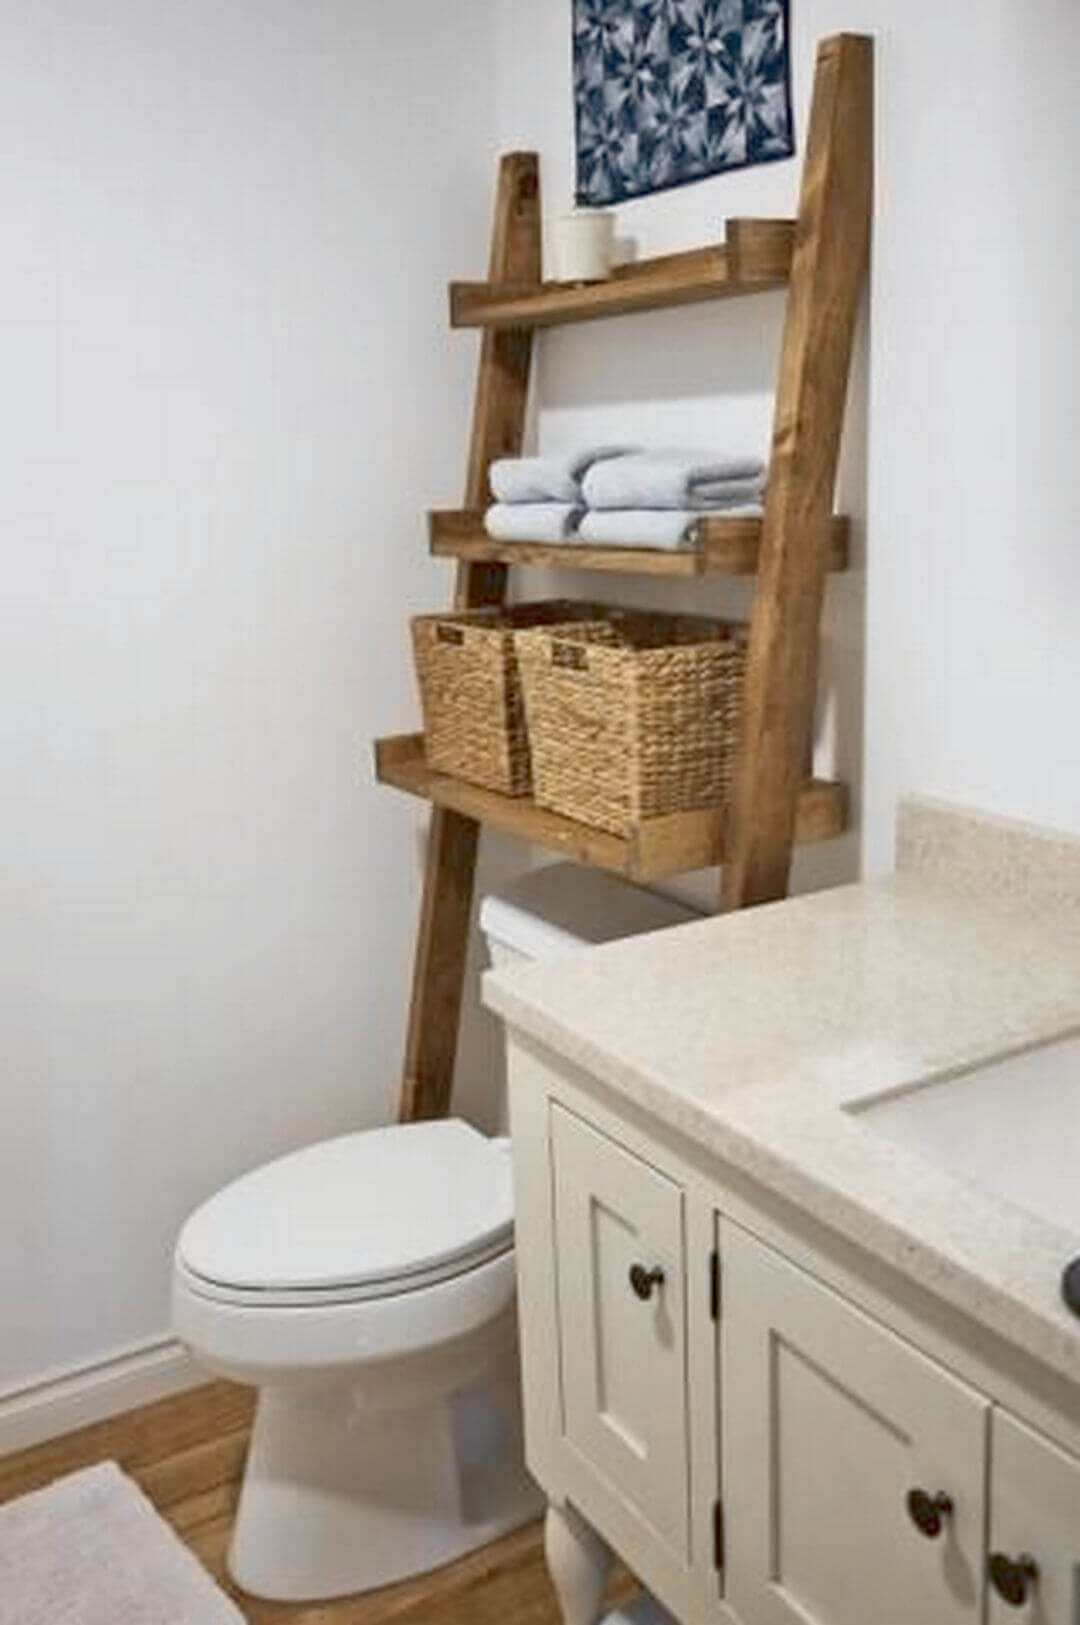 Bathroom Storage Ideas Ladder Organizer on the Toilet - Harptimes.com